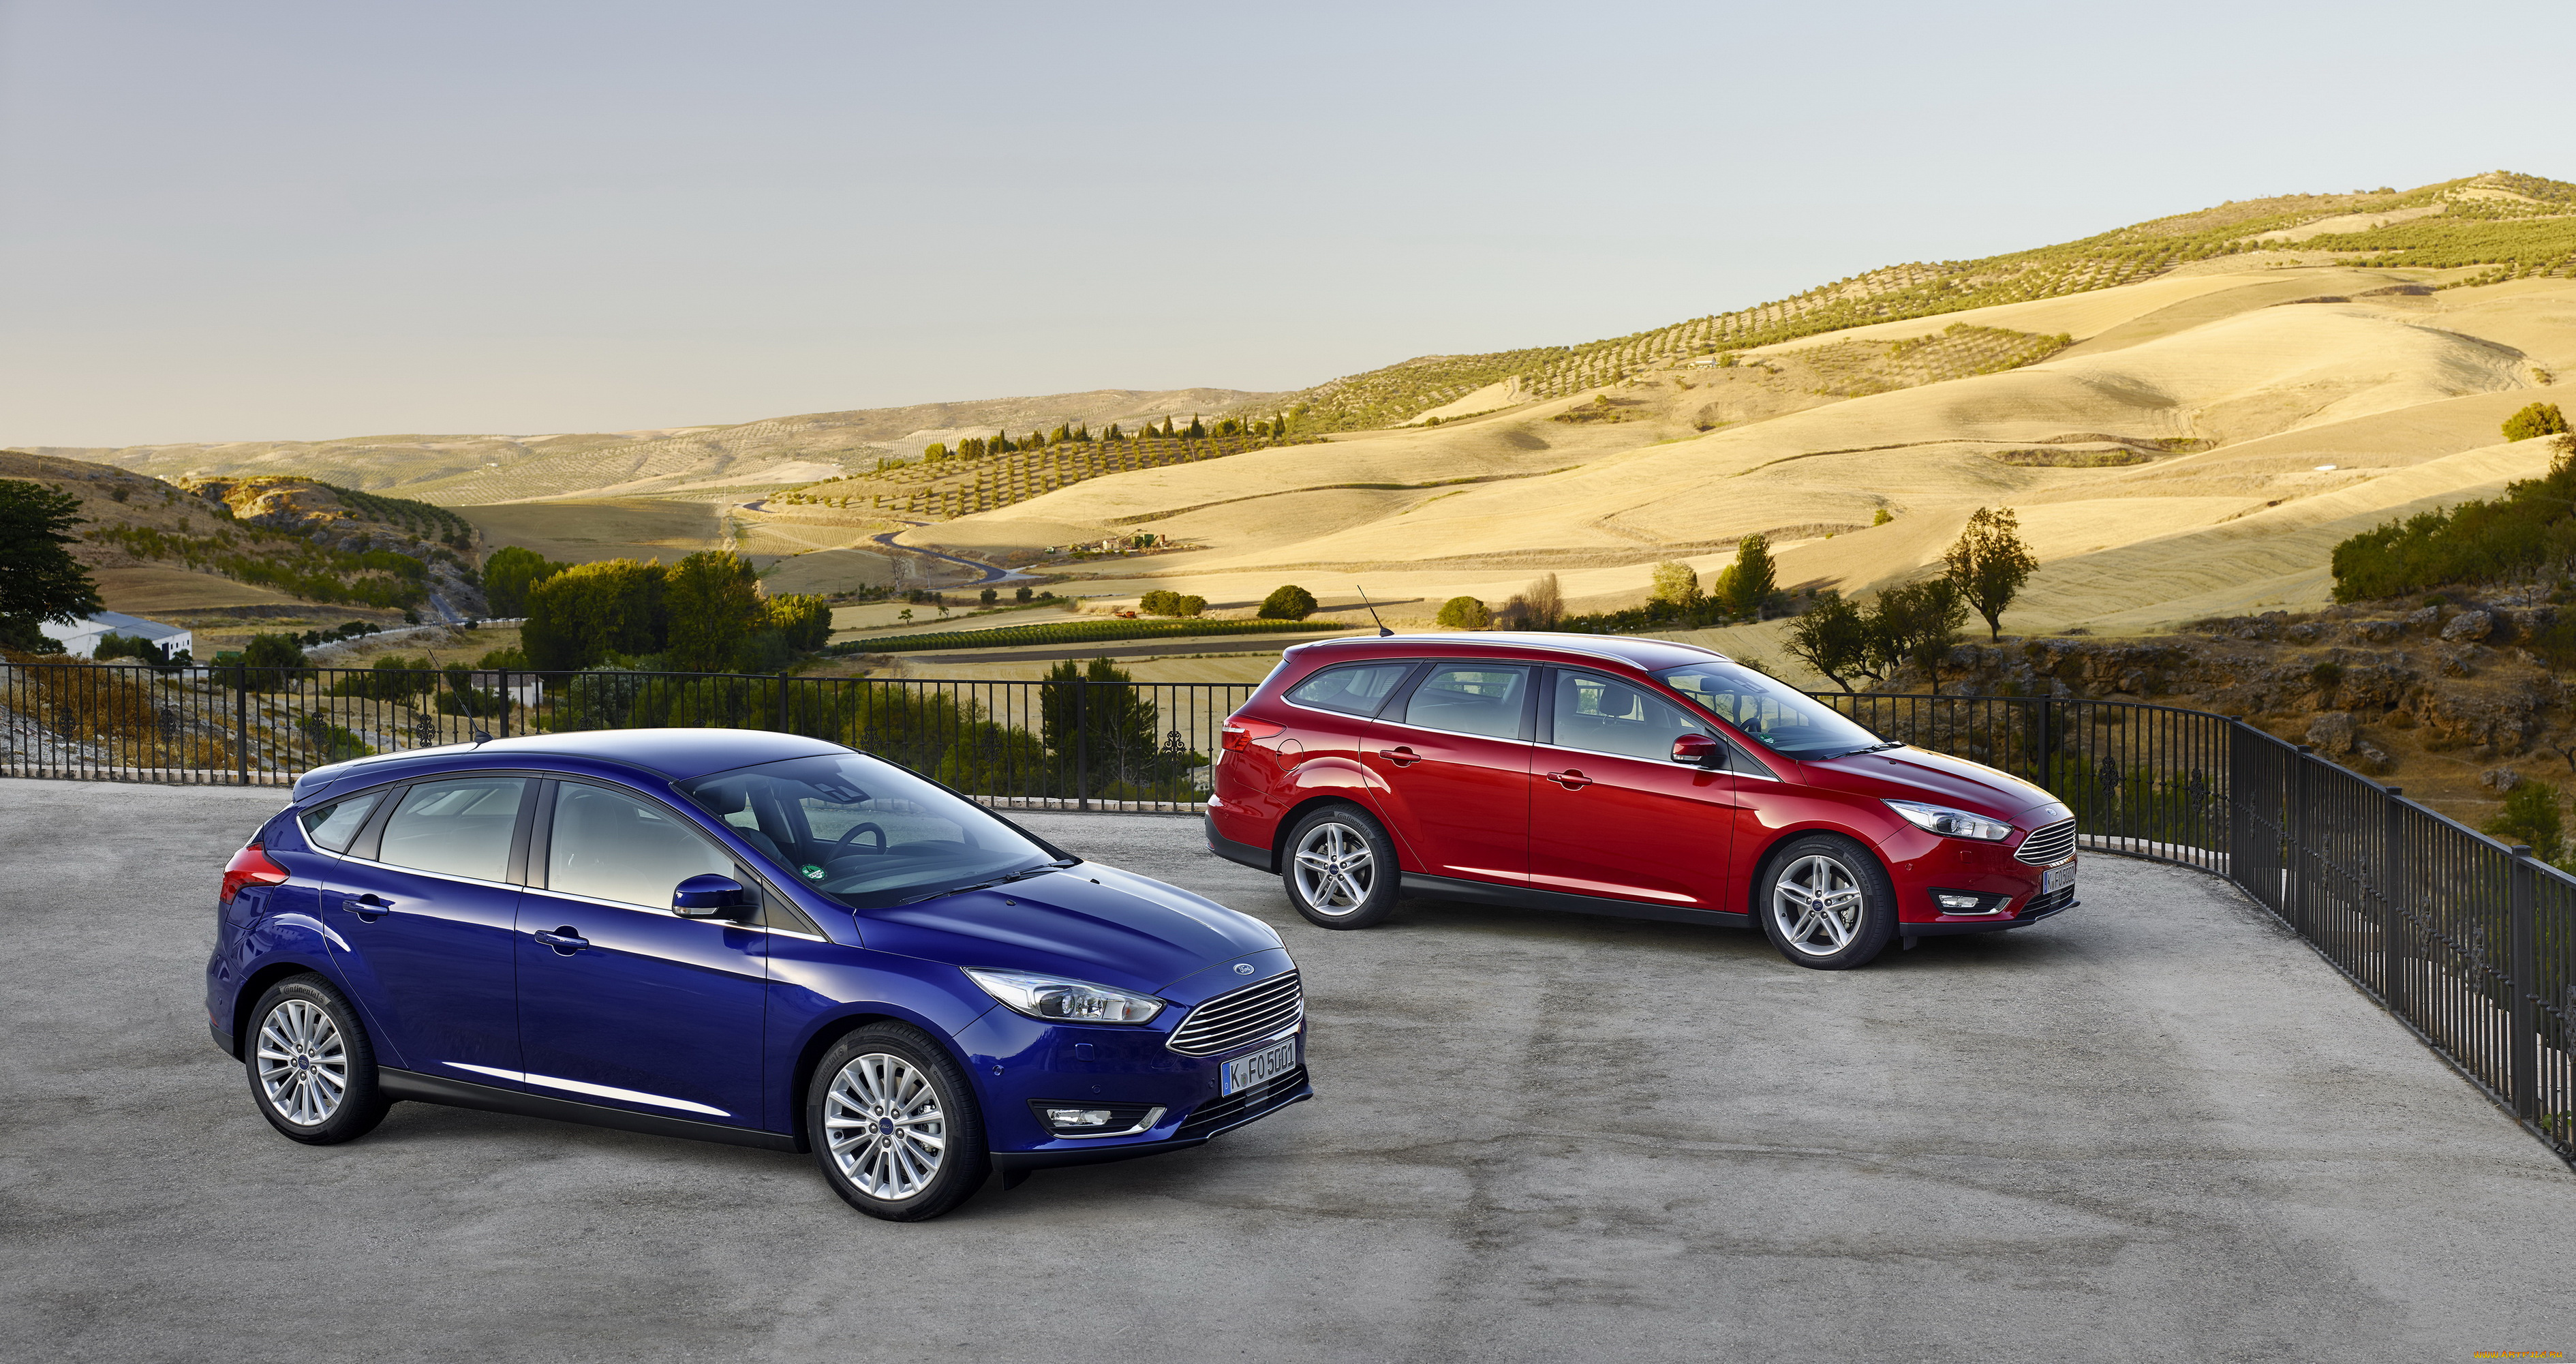 2014, ford, focus, sw, автомобили, ford, металлик, пикап, двое, focus